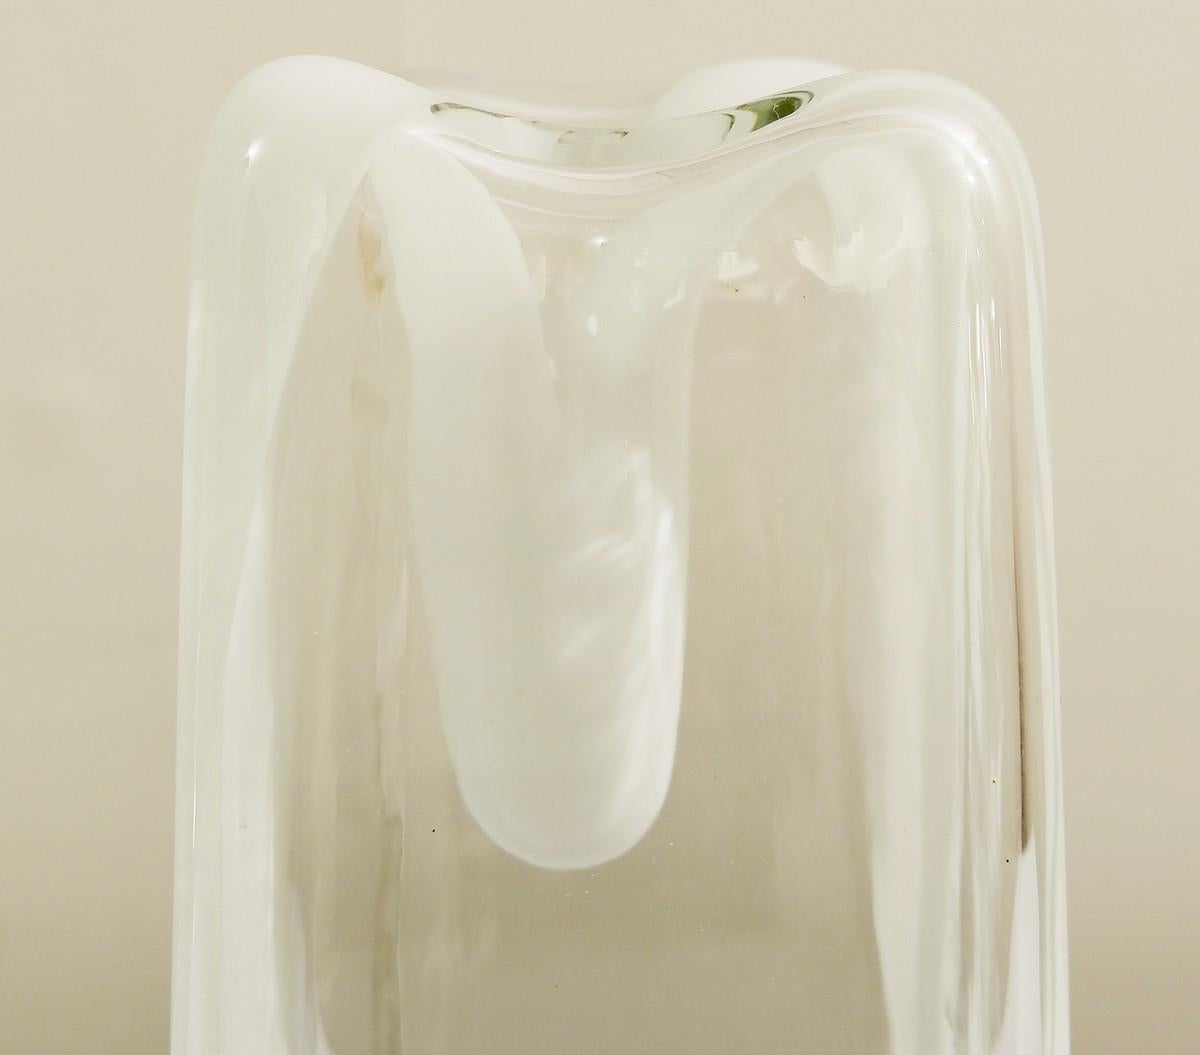 Sculptural Murano glass vase by Carlo Nason for Mazzega, Italy, 1970s.